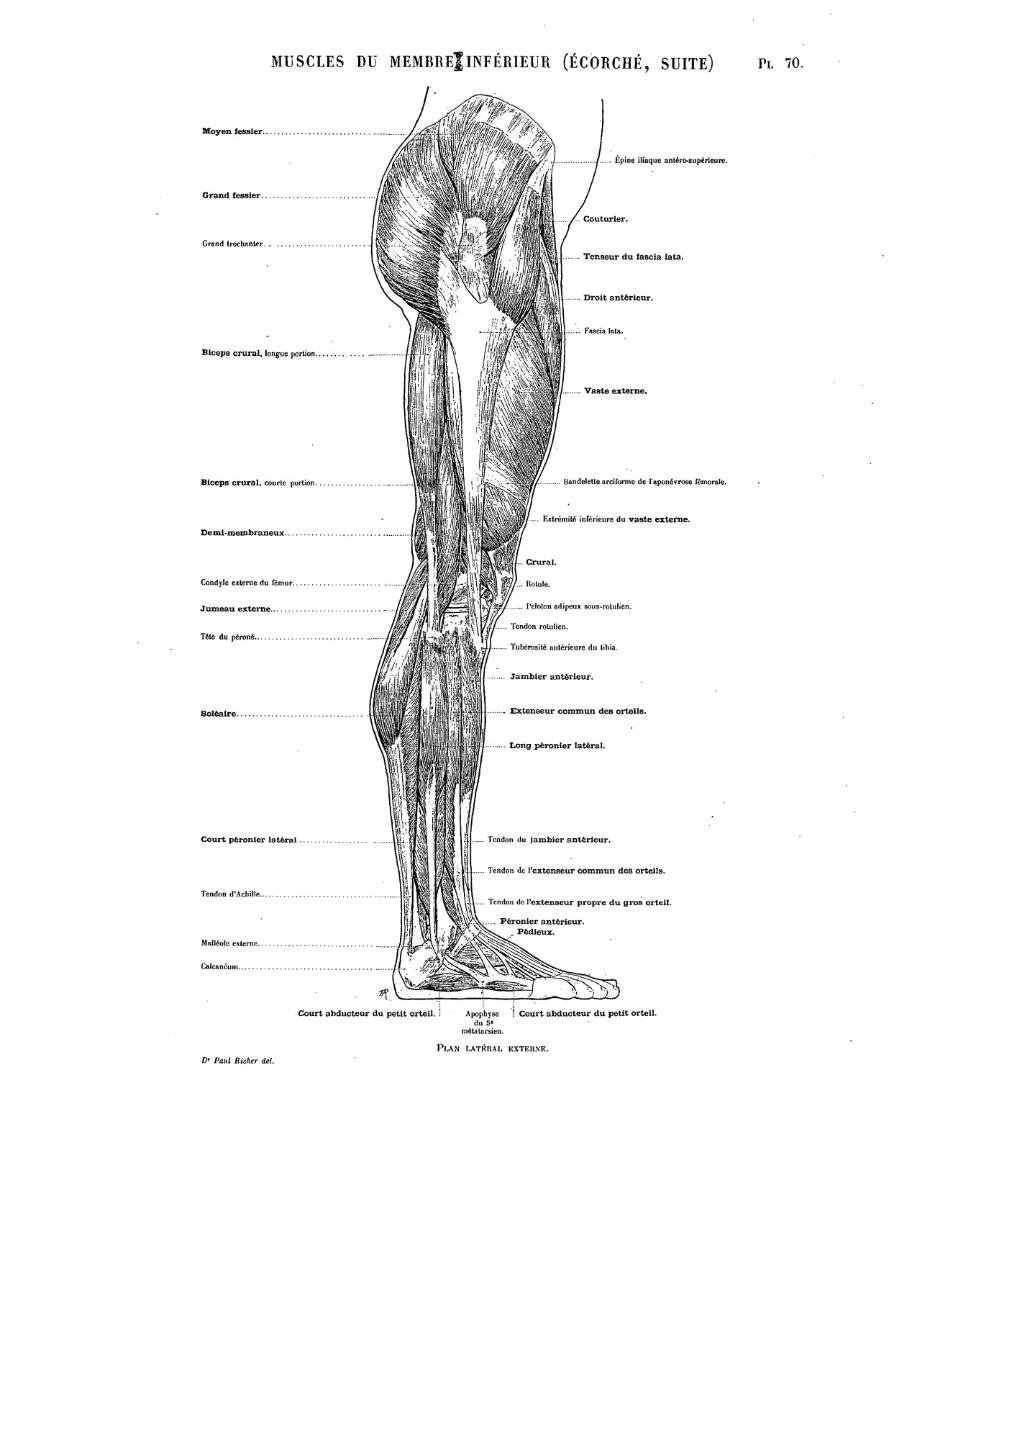 artistic anatomy by dr paul richer pdf viewer